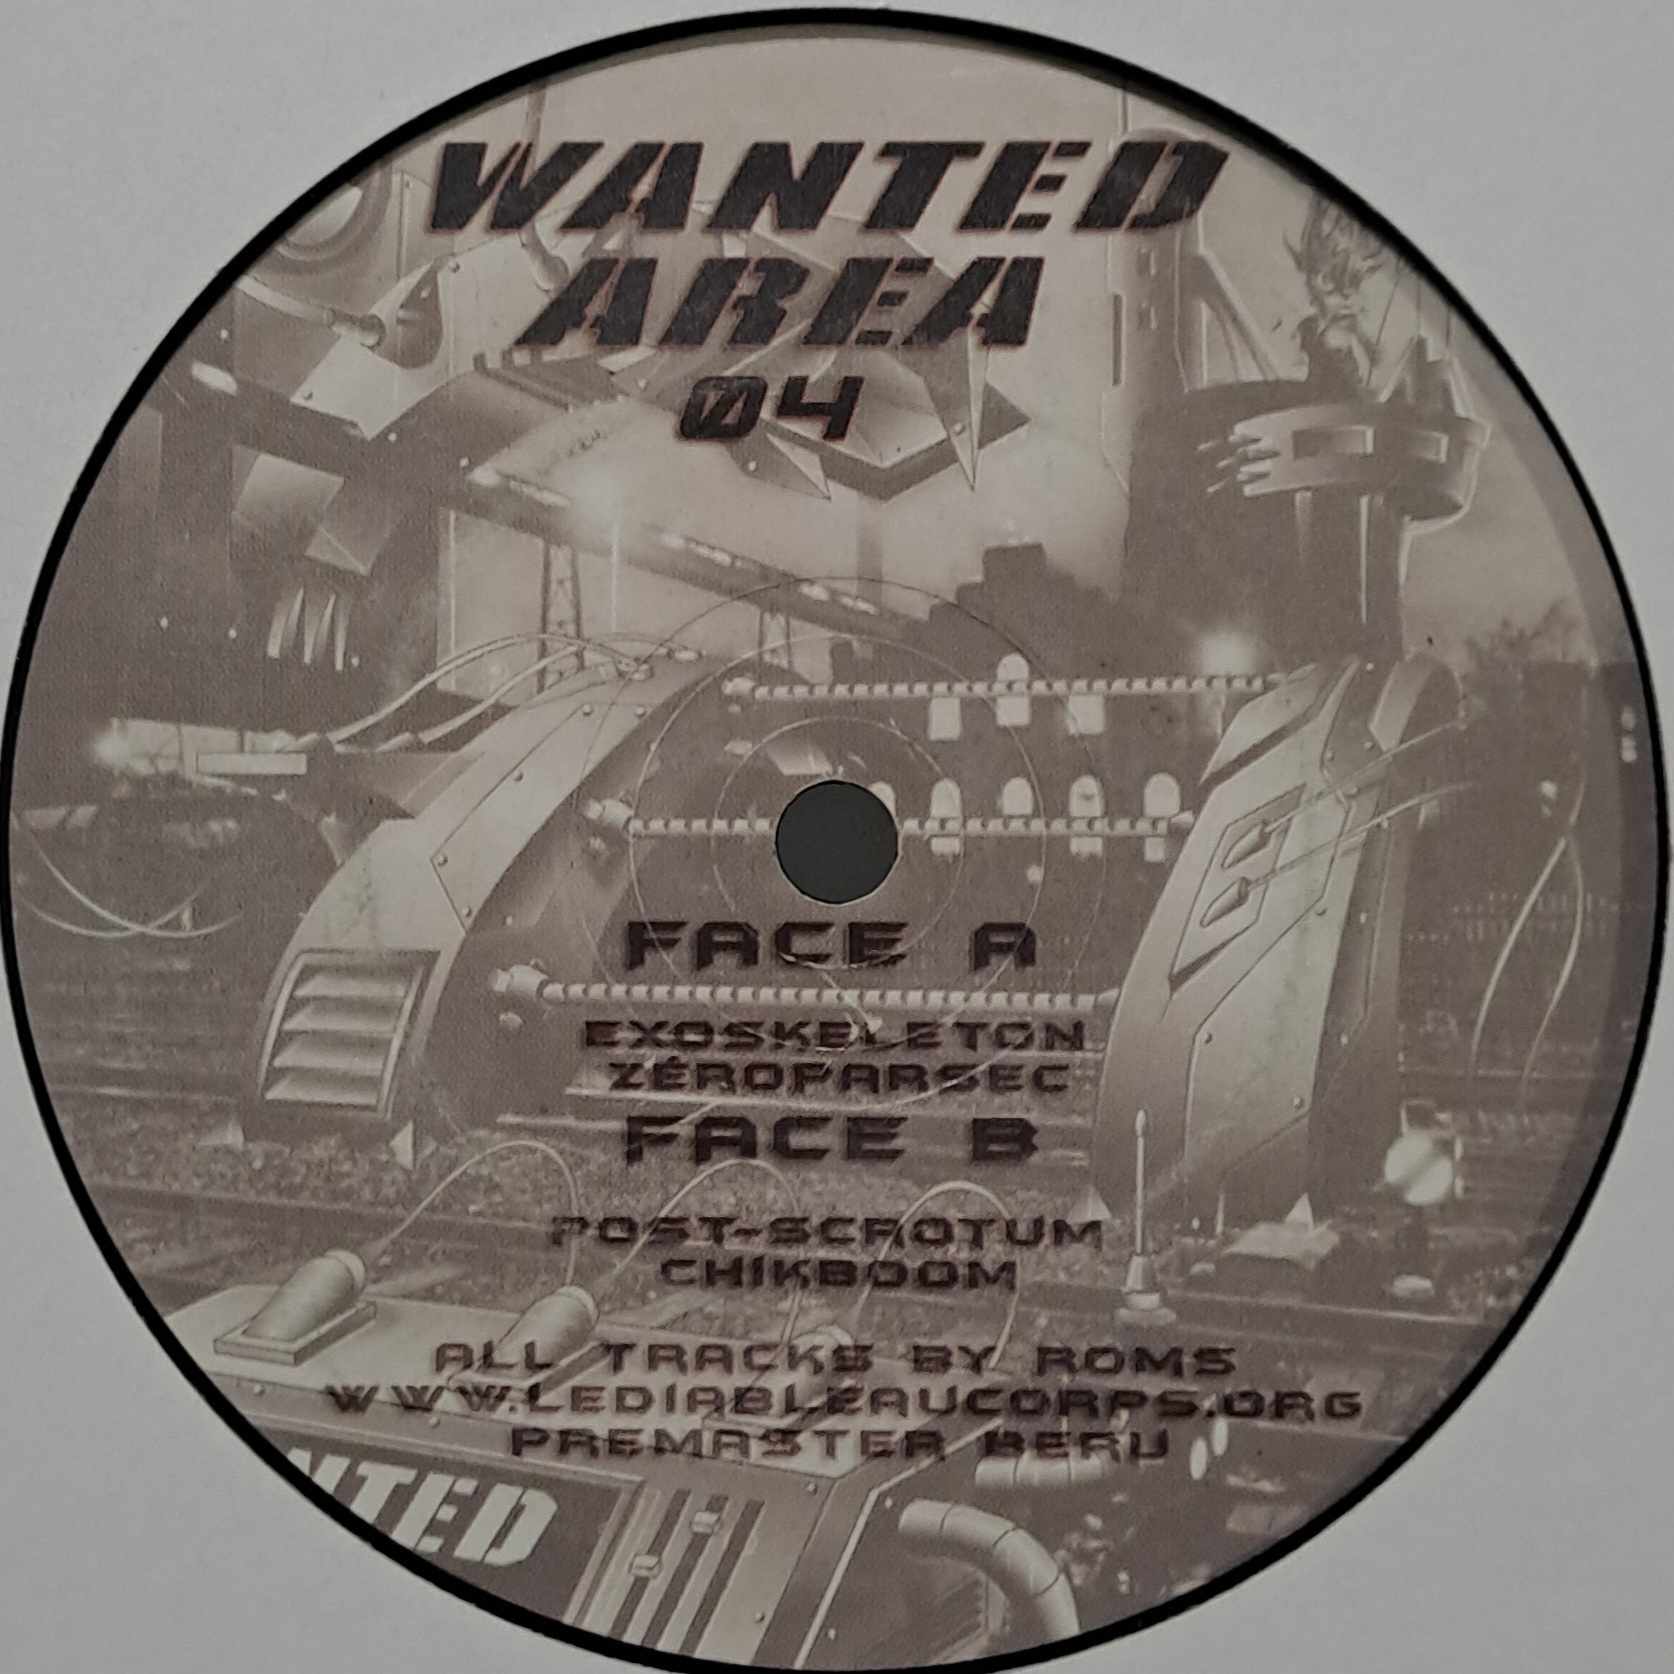 Wanted Area 004 - vinyle freetekno